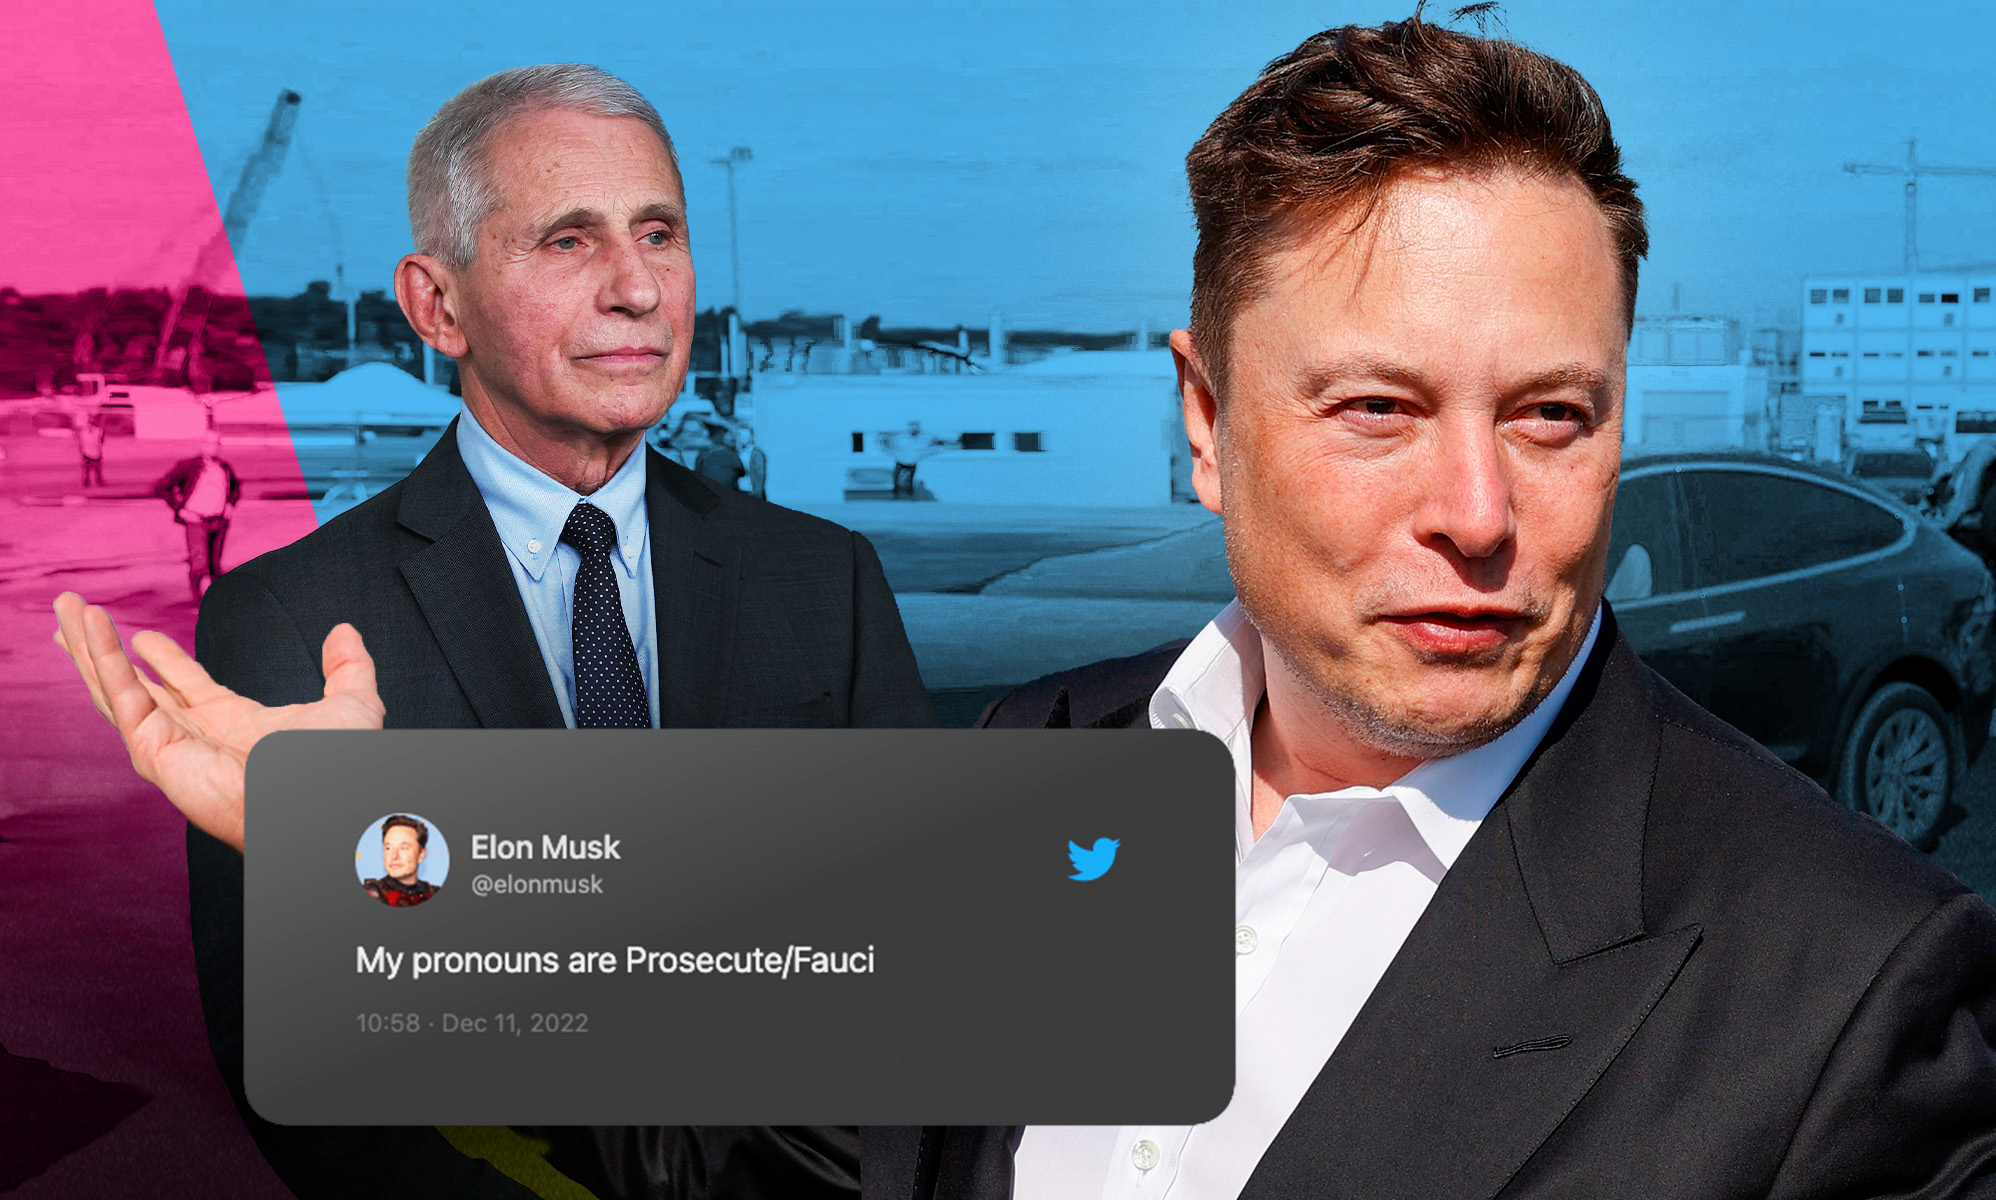 Elon Musk critica el uso de los pronombres en Twitter